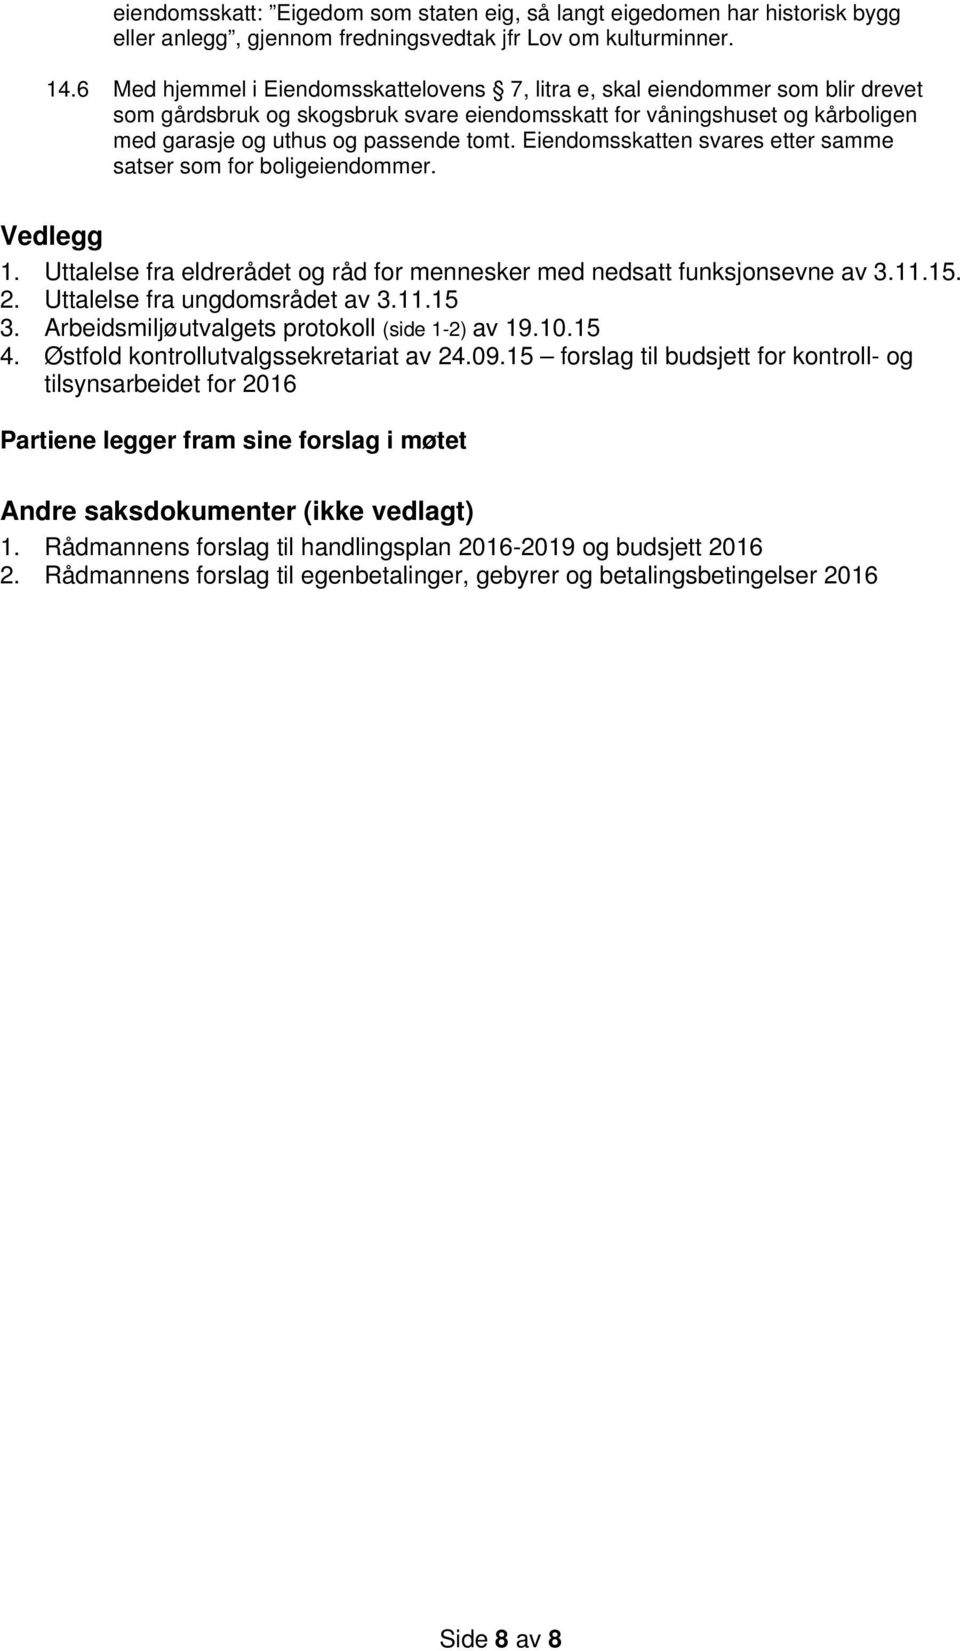 Arbeidsmiljøutvalgets protokoll (side 1-2) av 19.10.15 4. Østfold kontrollutvalgssekretariat av 24.09.